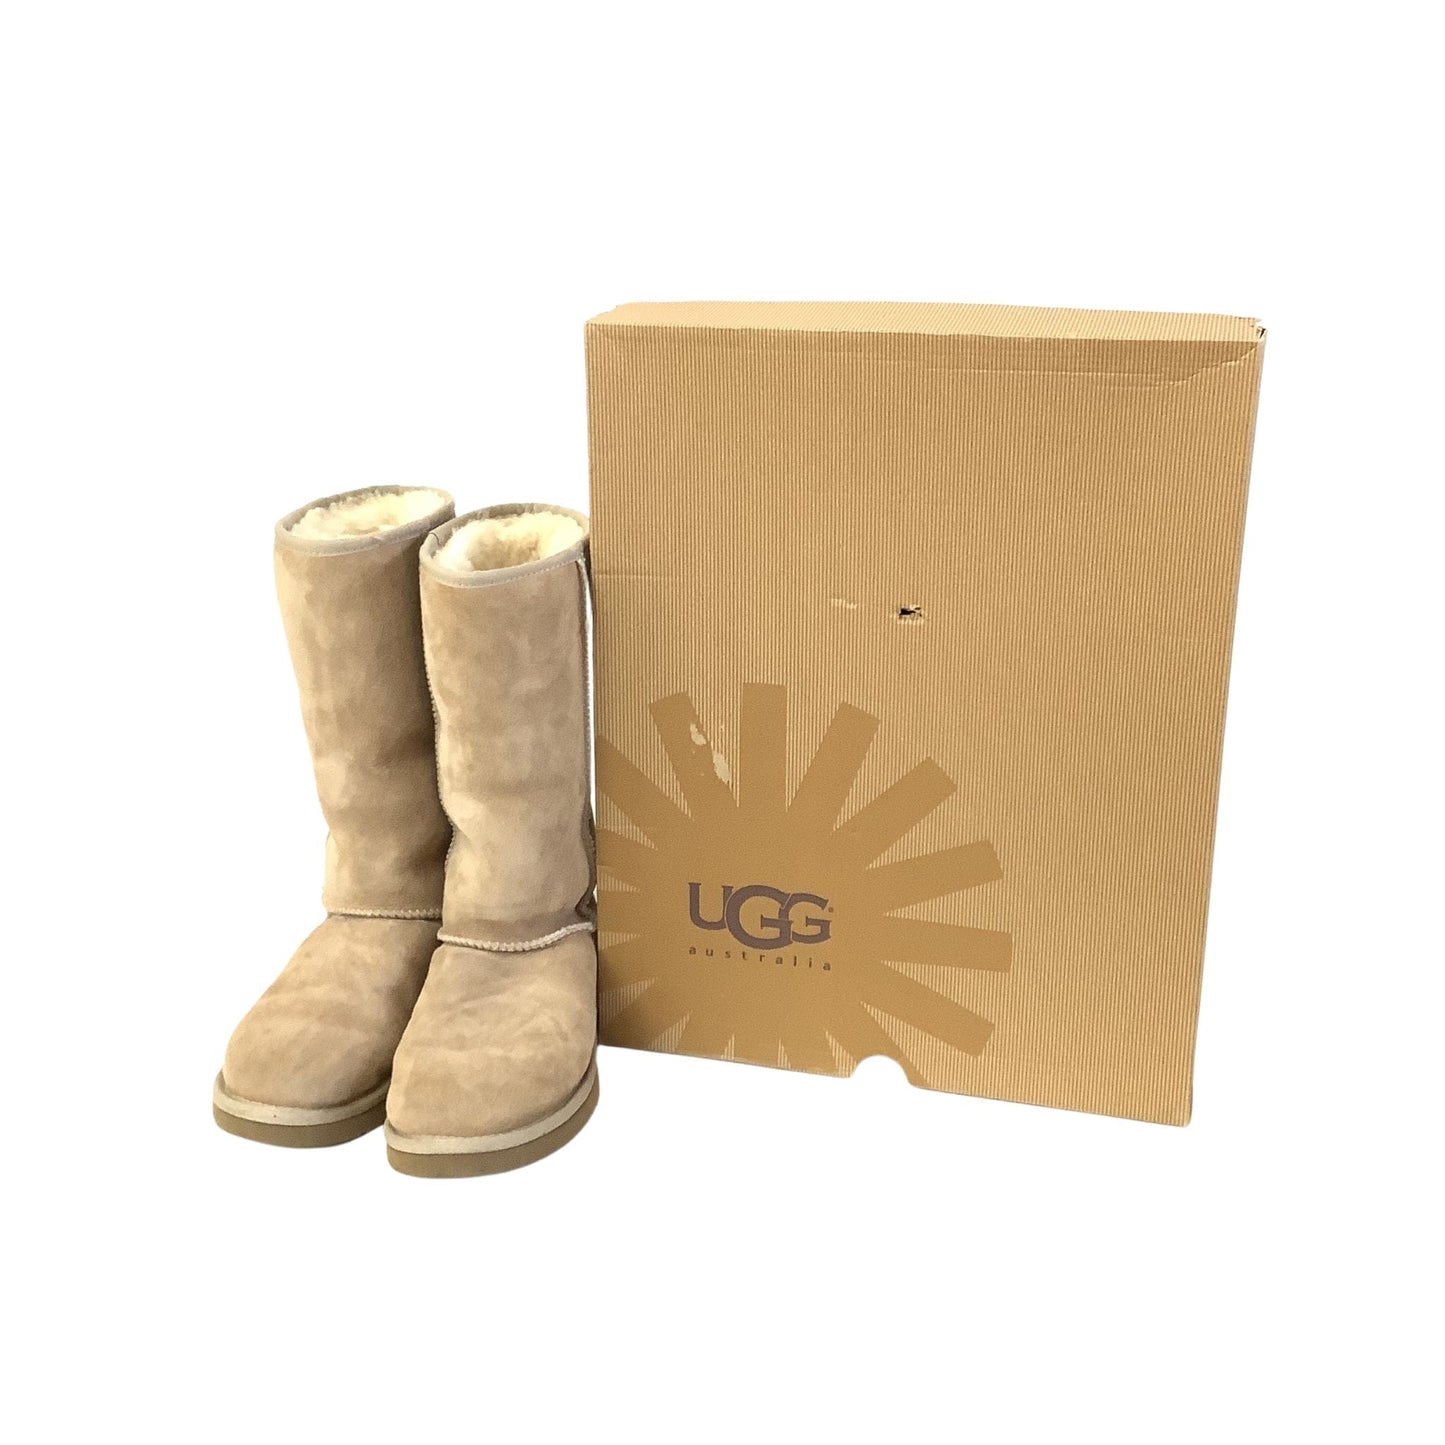 Ugg Tan Boots 7 / Tan / Classic